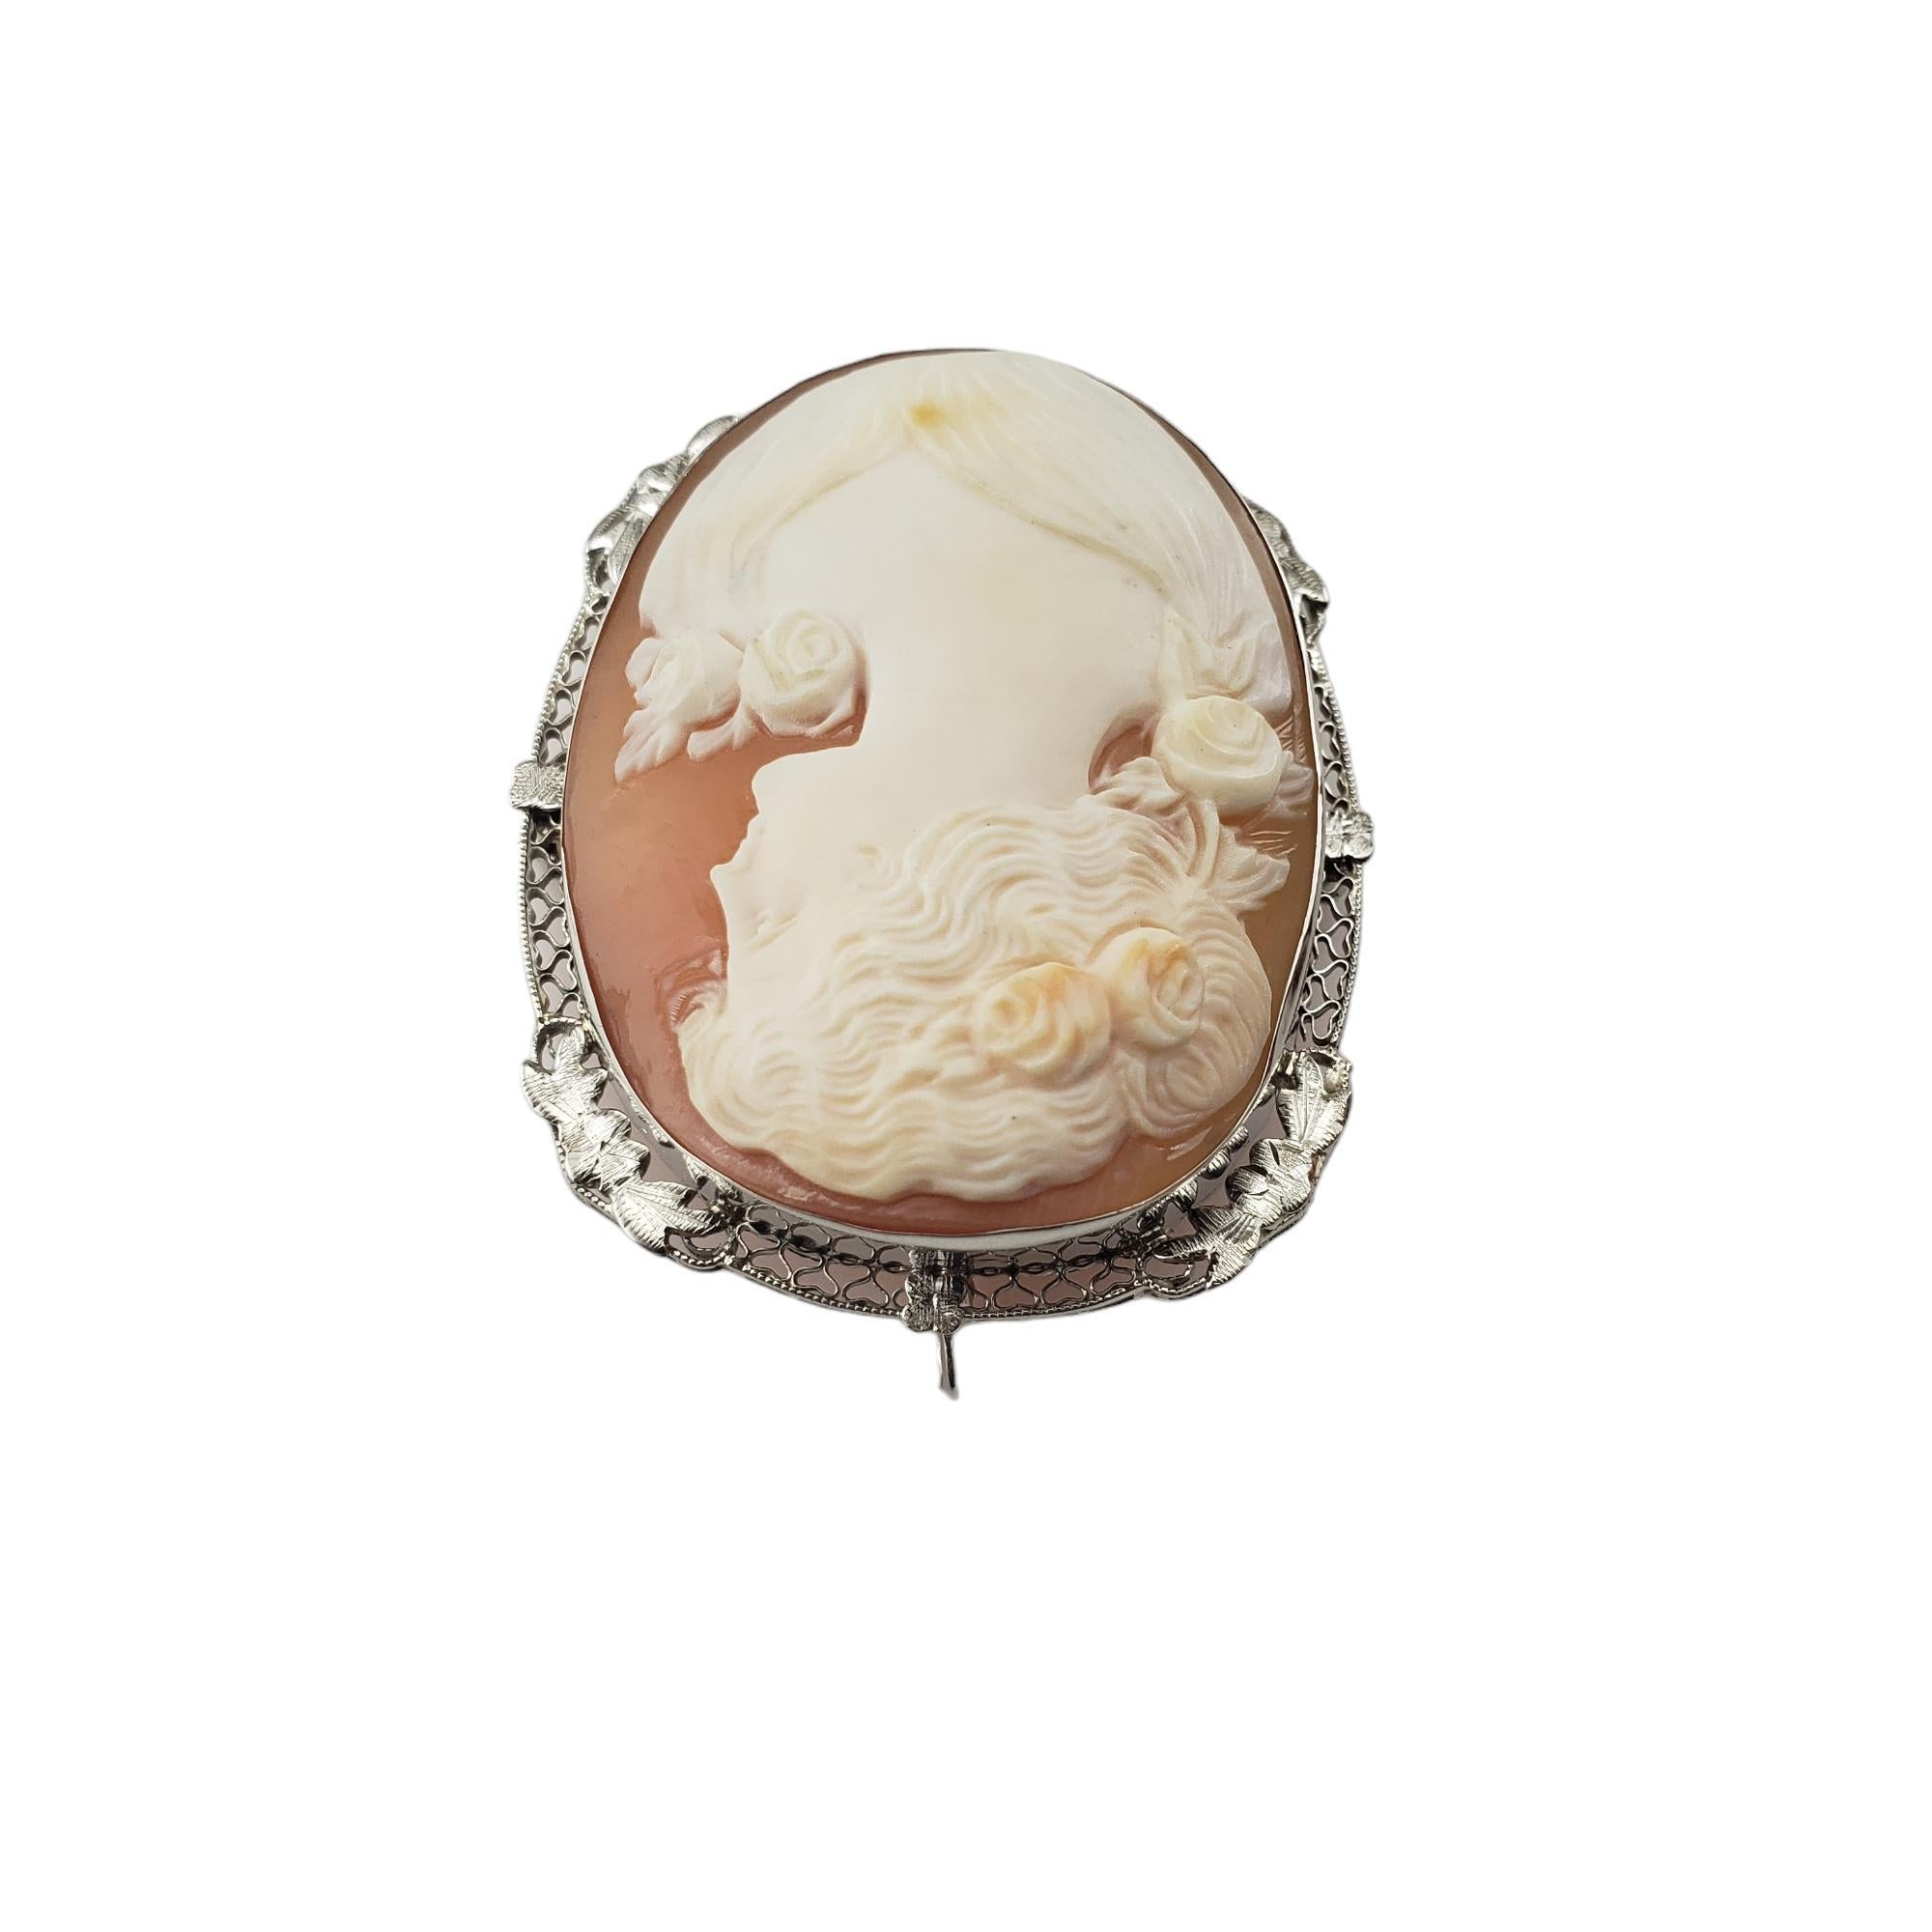 Women's 14 Karat White Gold Cameo Brooch/Pendant #15511 For Sale